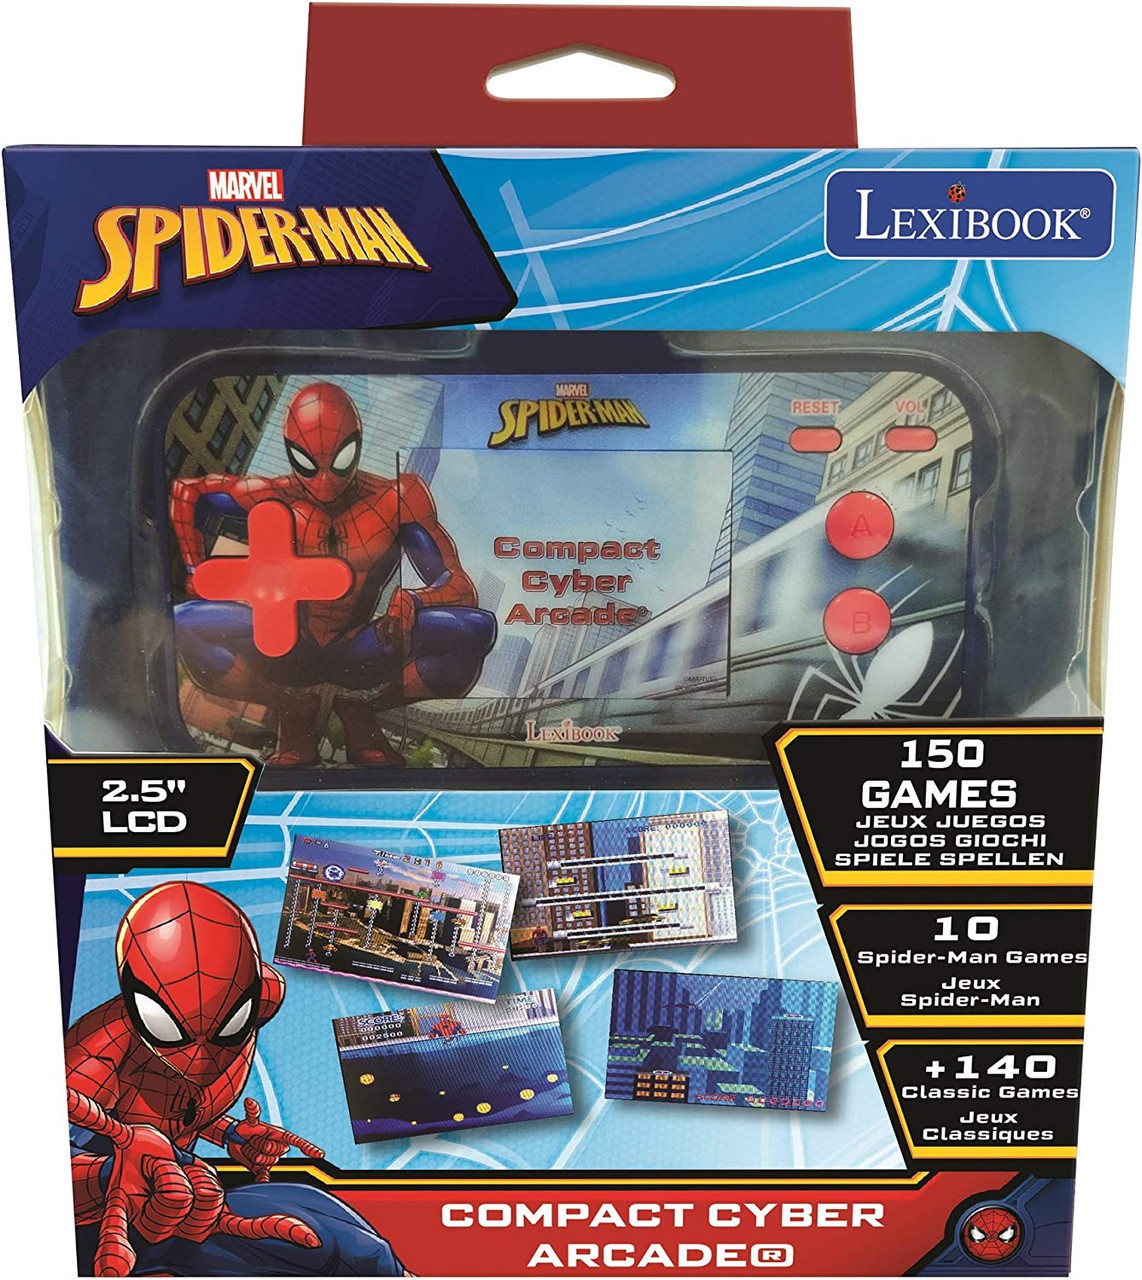 LexiBook Spiderman Gaming Console